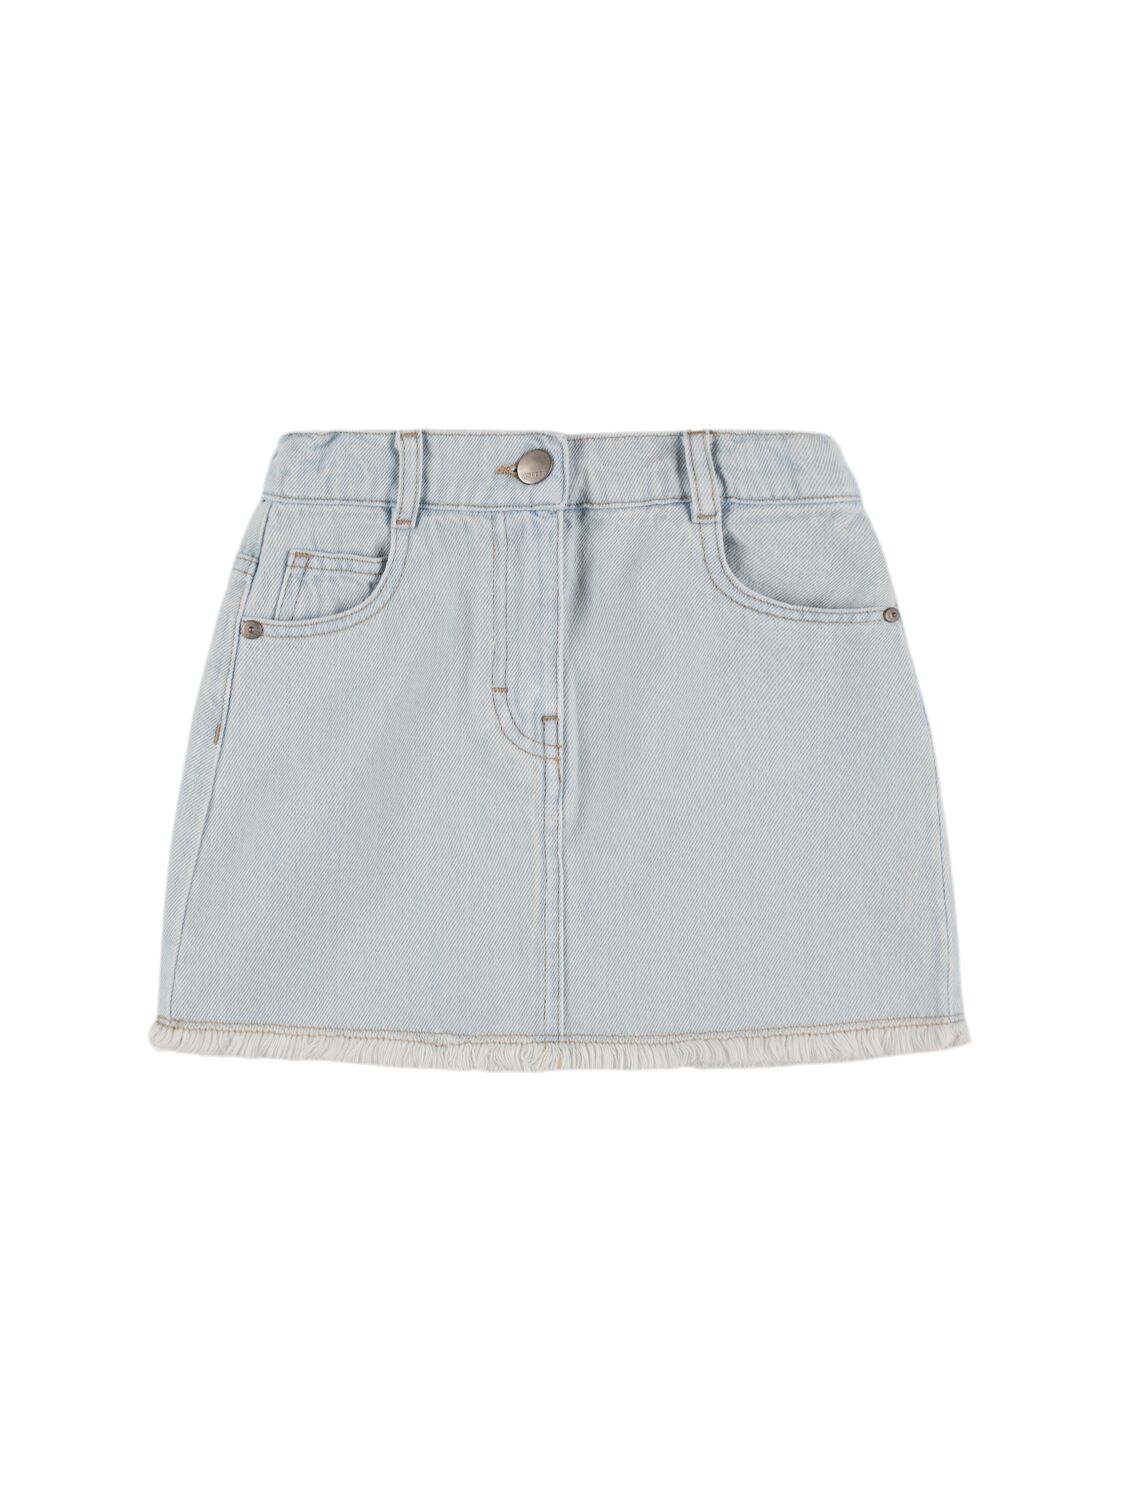 Image of Cotton Denim Skirt